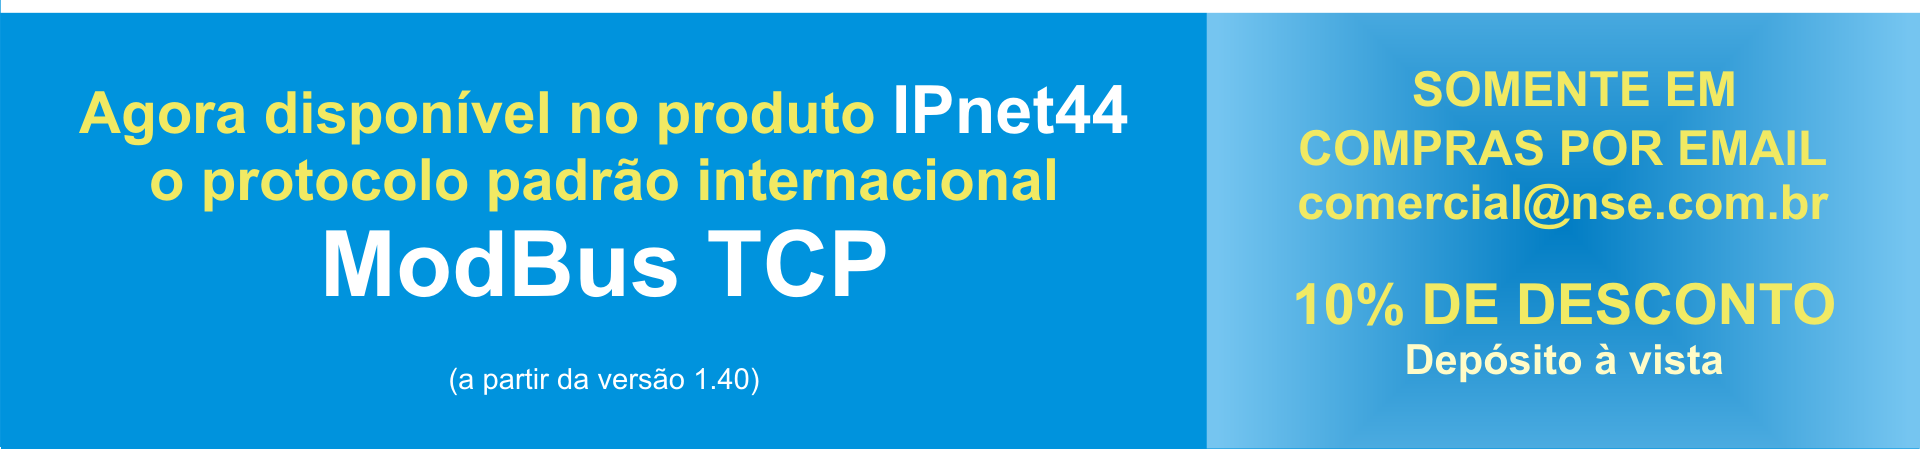 Disponível no produto IPnet44: ModBus TCP